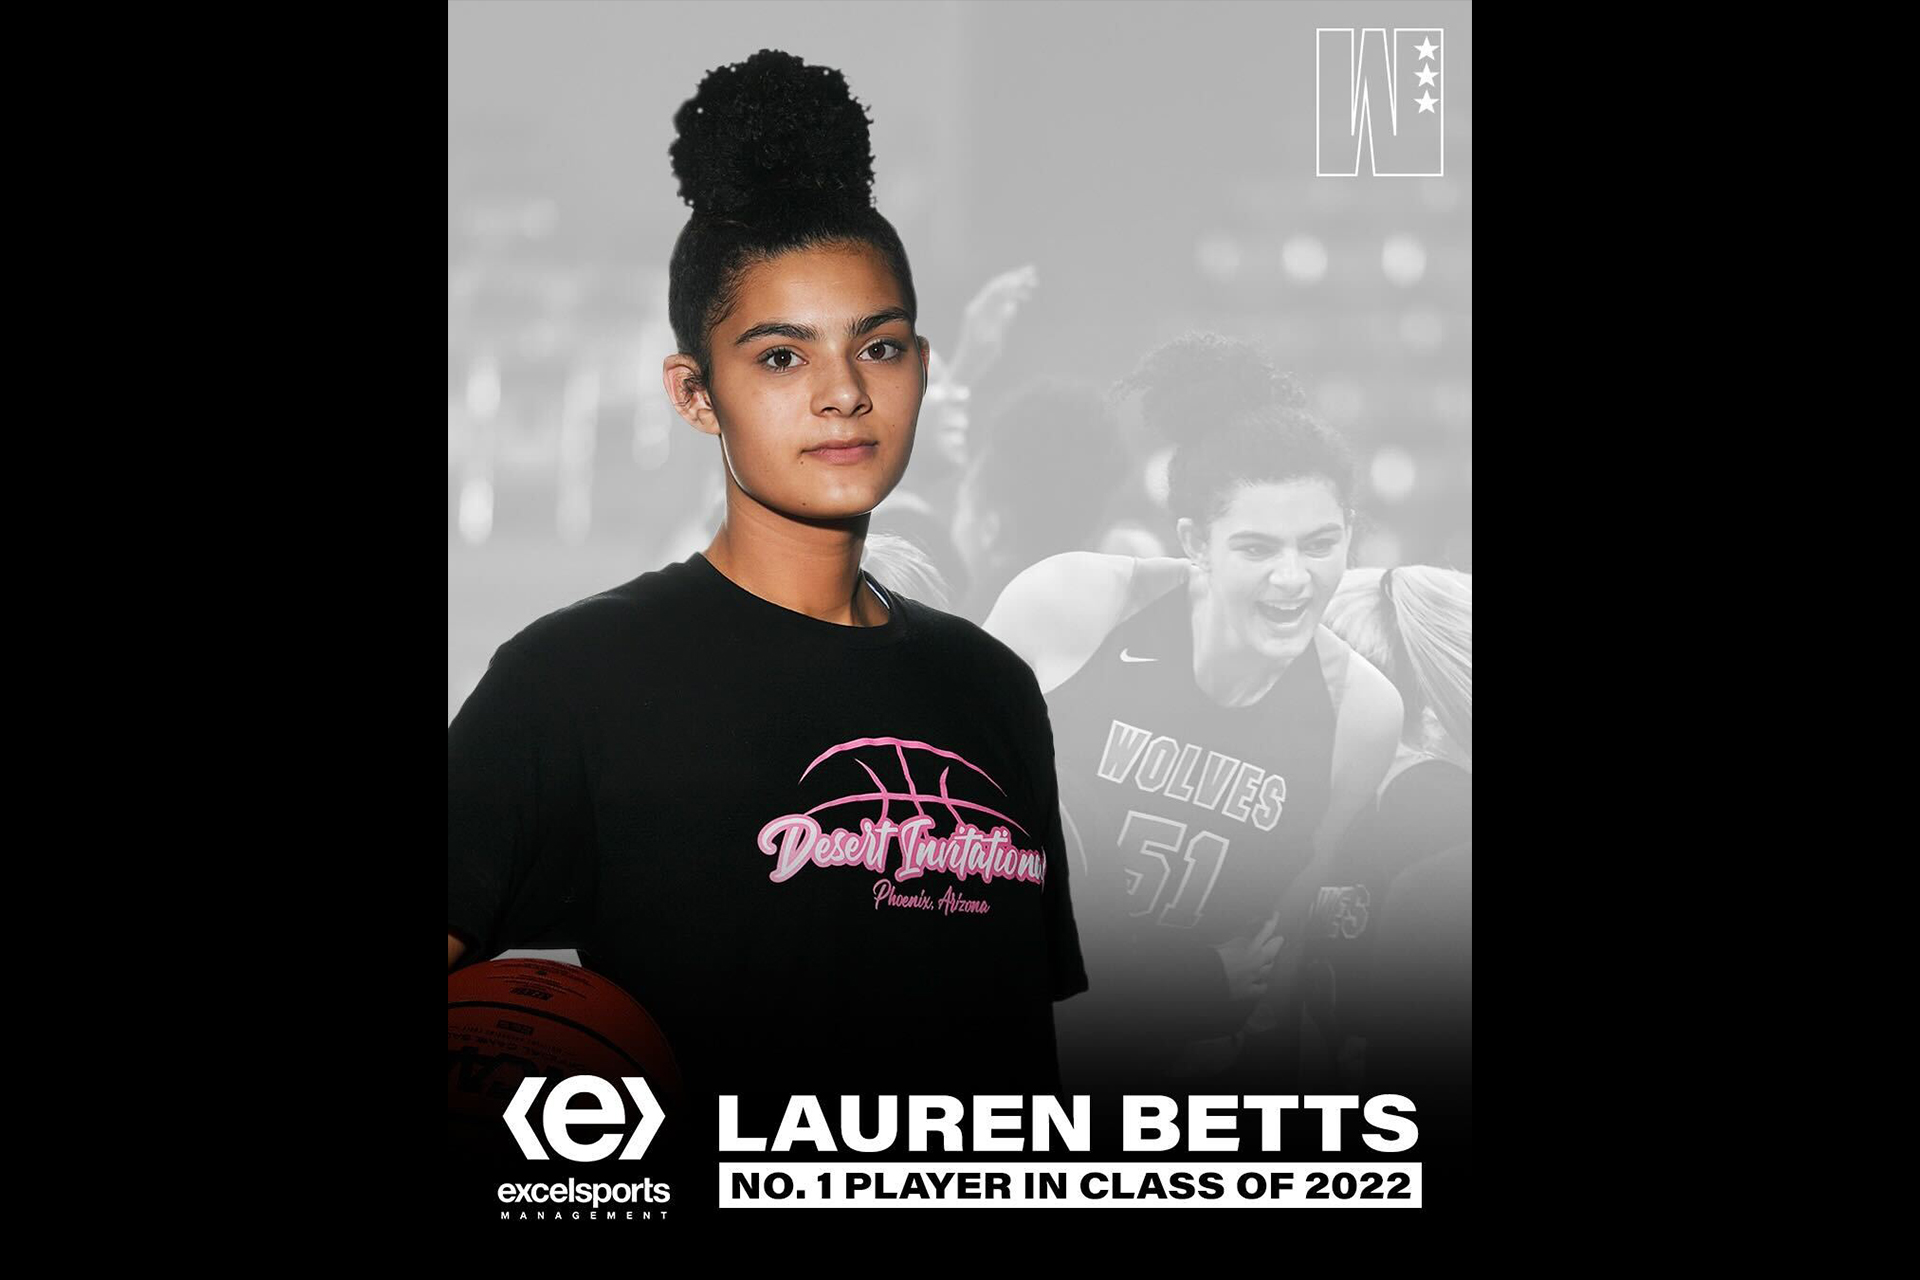 Lauren Betts Showing She Belongs Among World's Best With Selection to USA  U16 National Team - USA Basketball